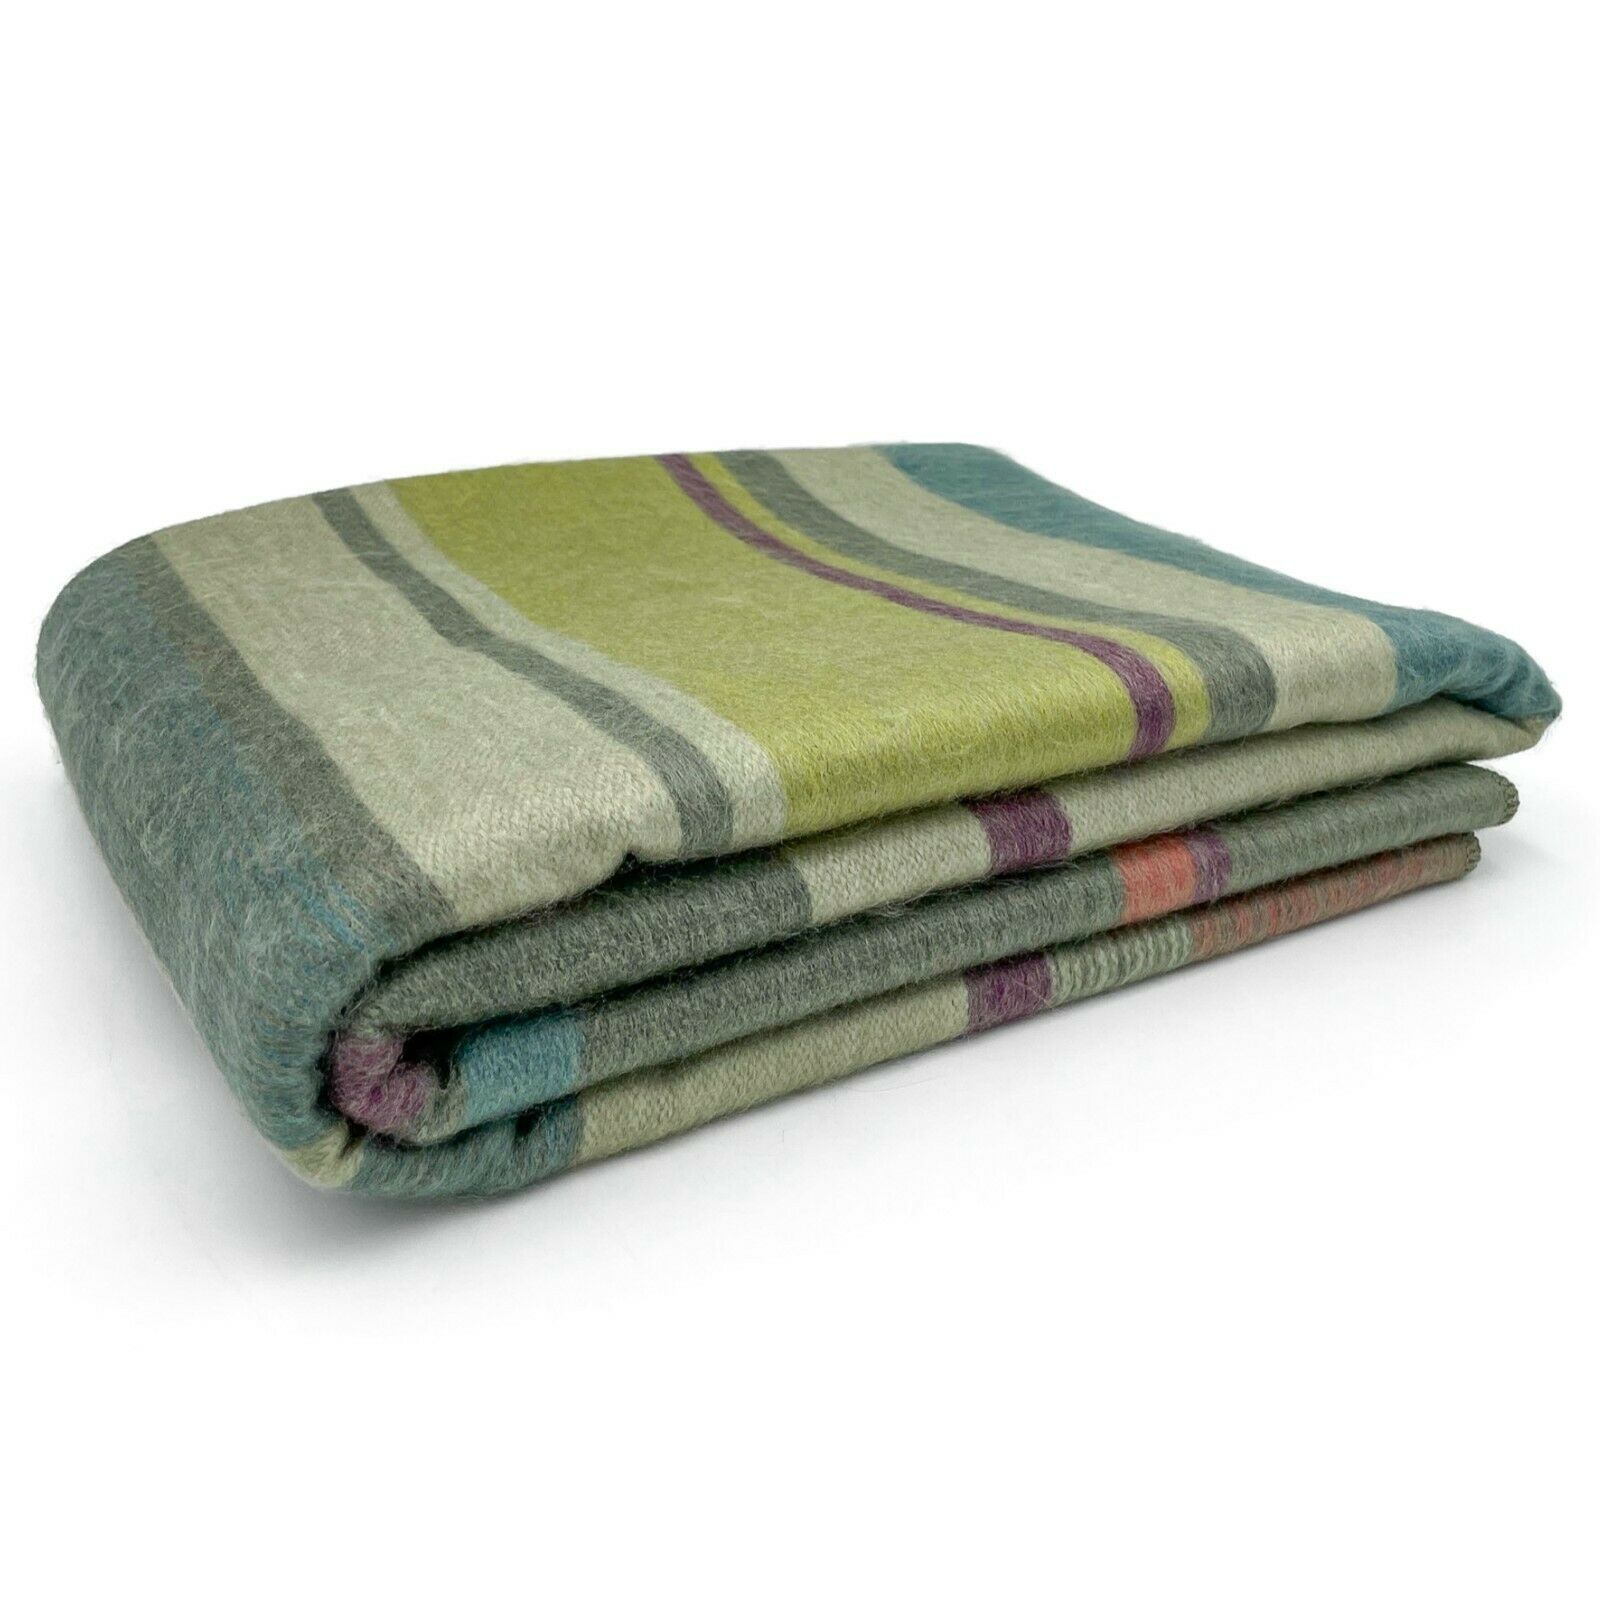 Biblian - Baby Alpaca Wool Throw Blanket / Sofa Cover - Queen 96" x 67" - striped cream/pistachio/turquoise/grey